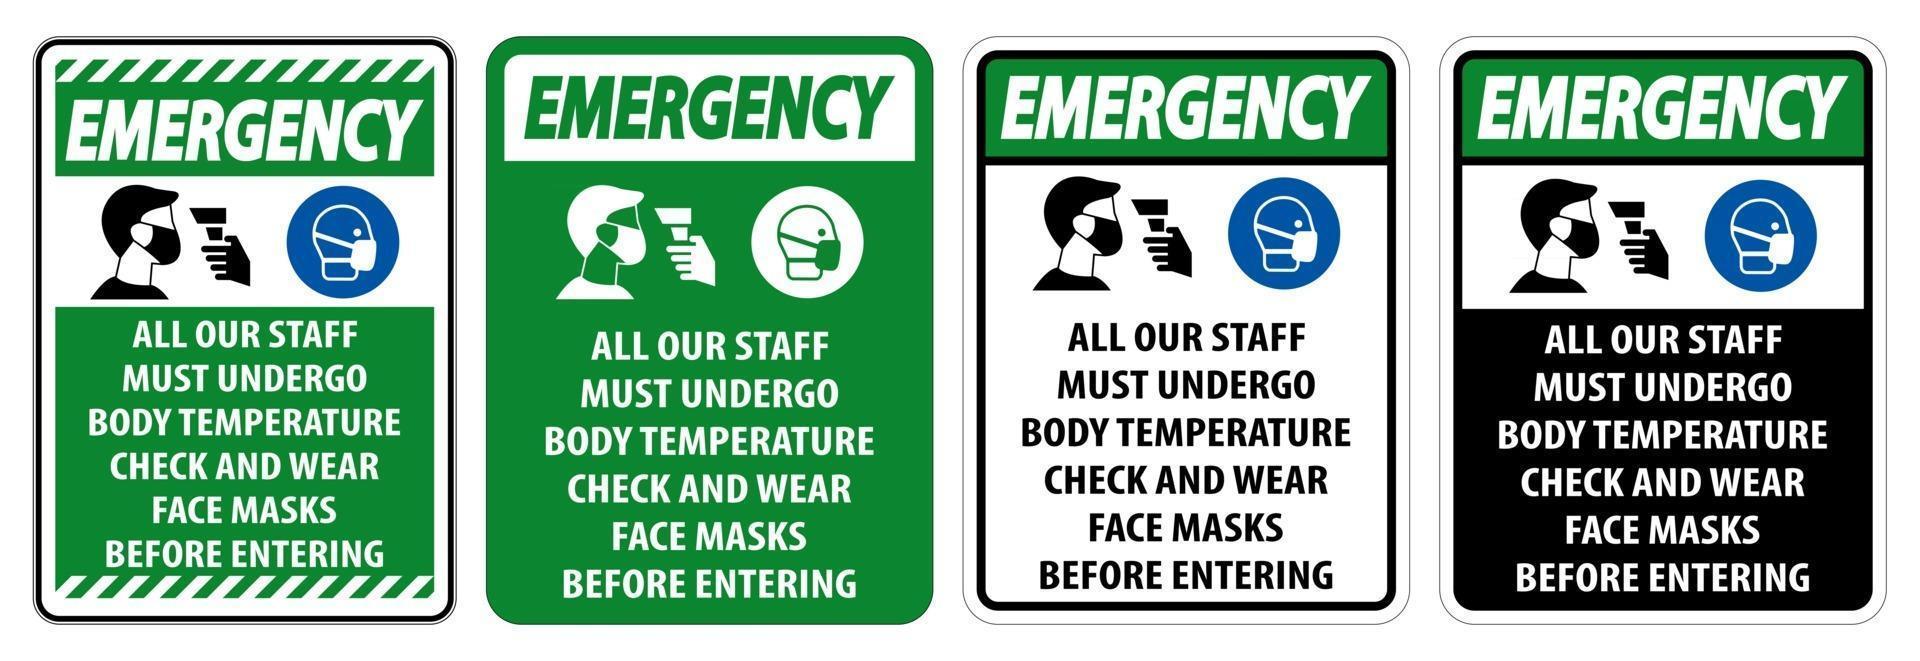 Emergency Staff Must Undergo Temperature Check Sign vector